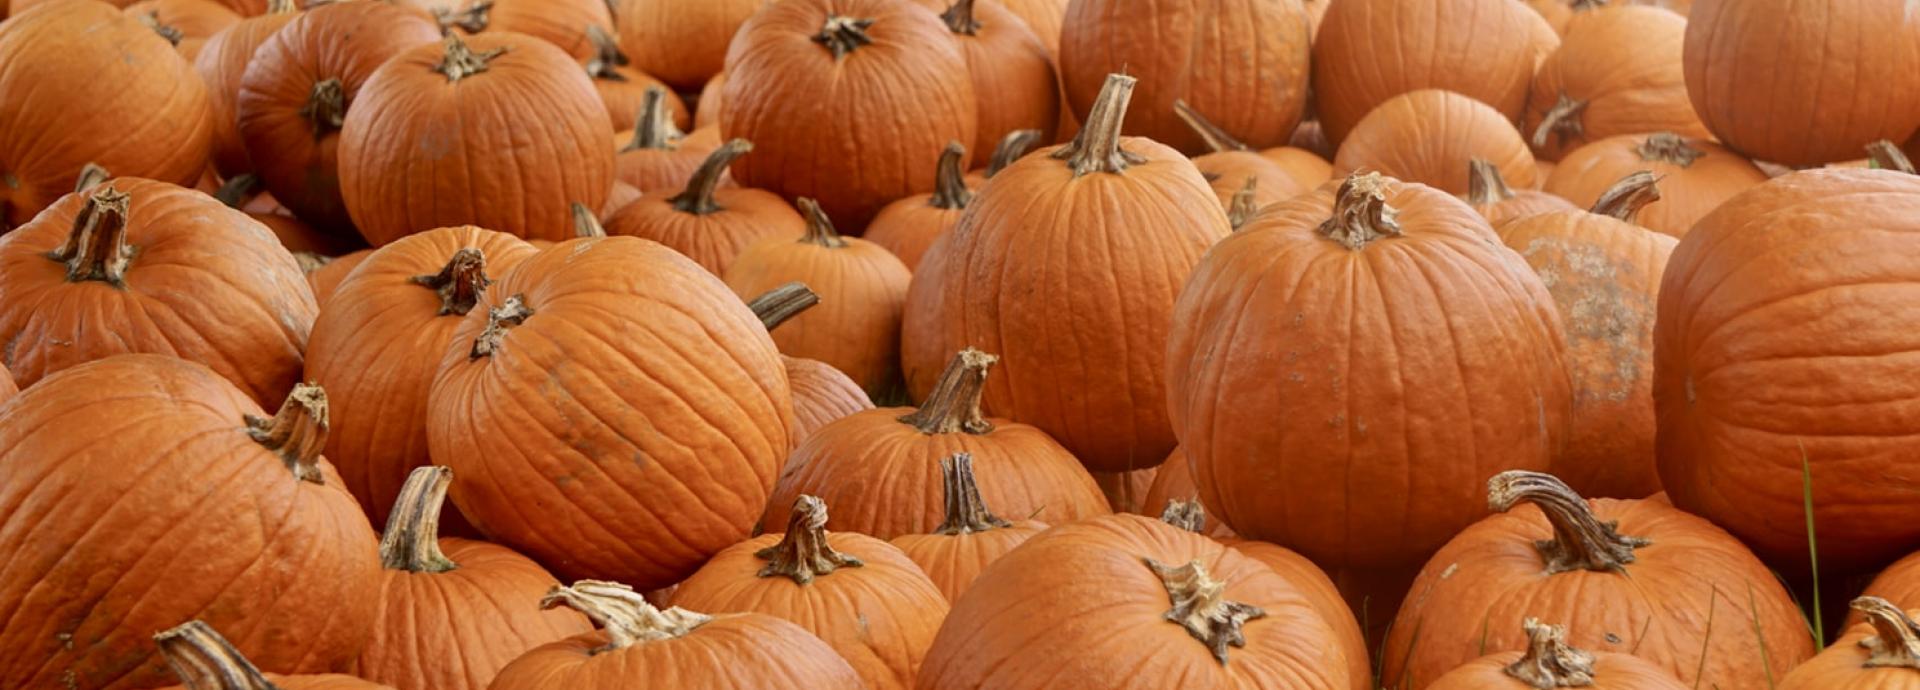 A free, horizontal, non-stock photo of pumpkins from unsplash.com 